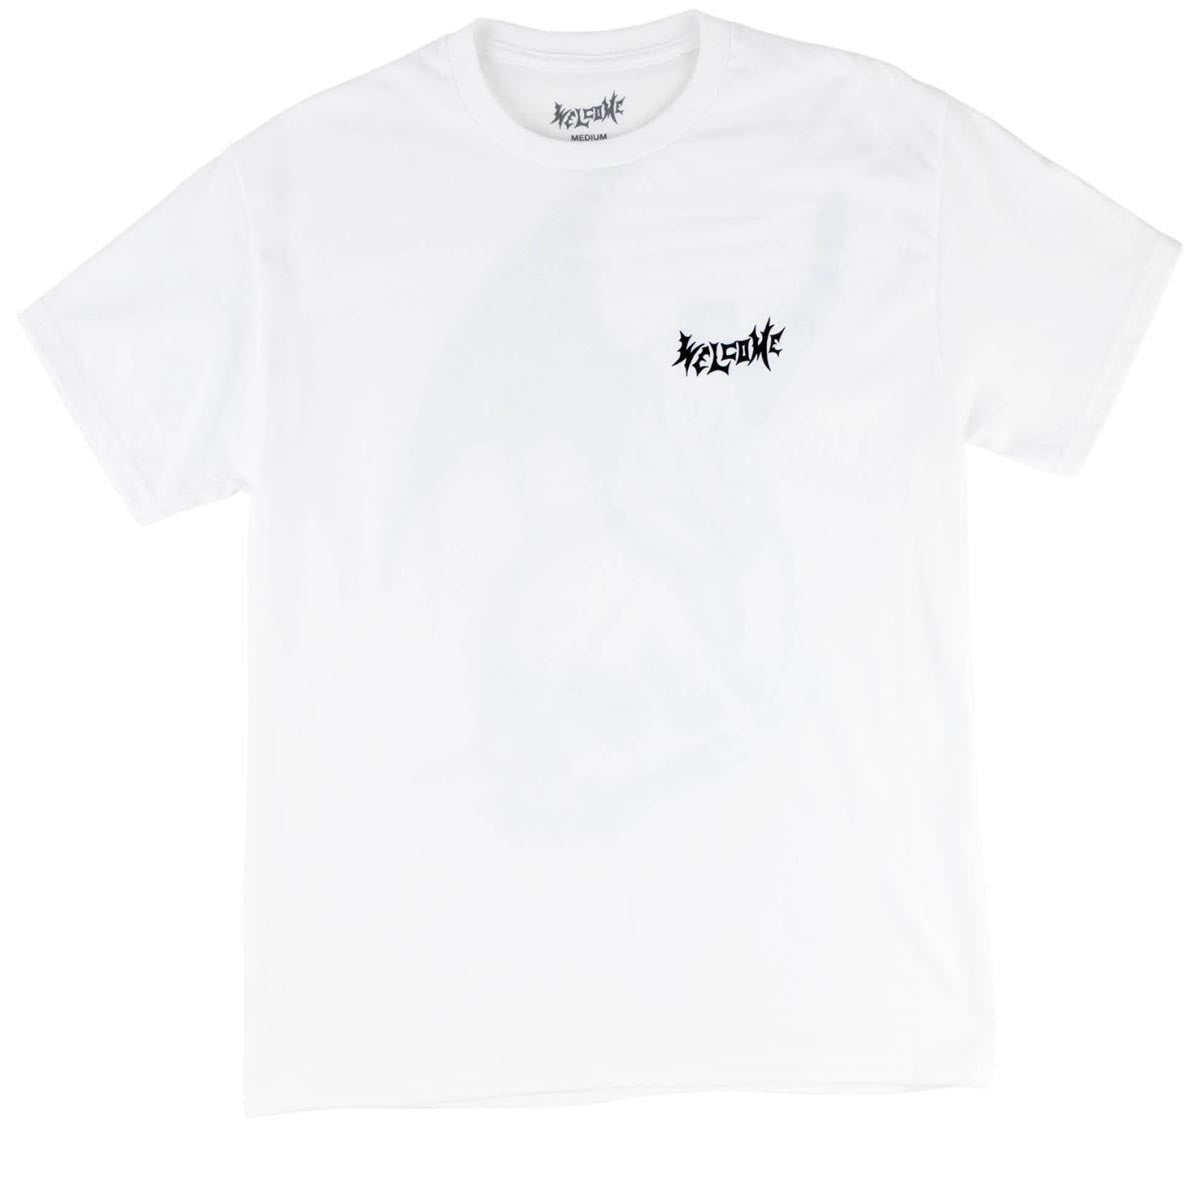 Welcome Nephilim T-Shirt - White/Black image 2